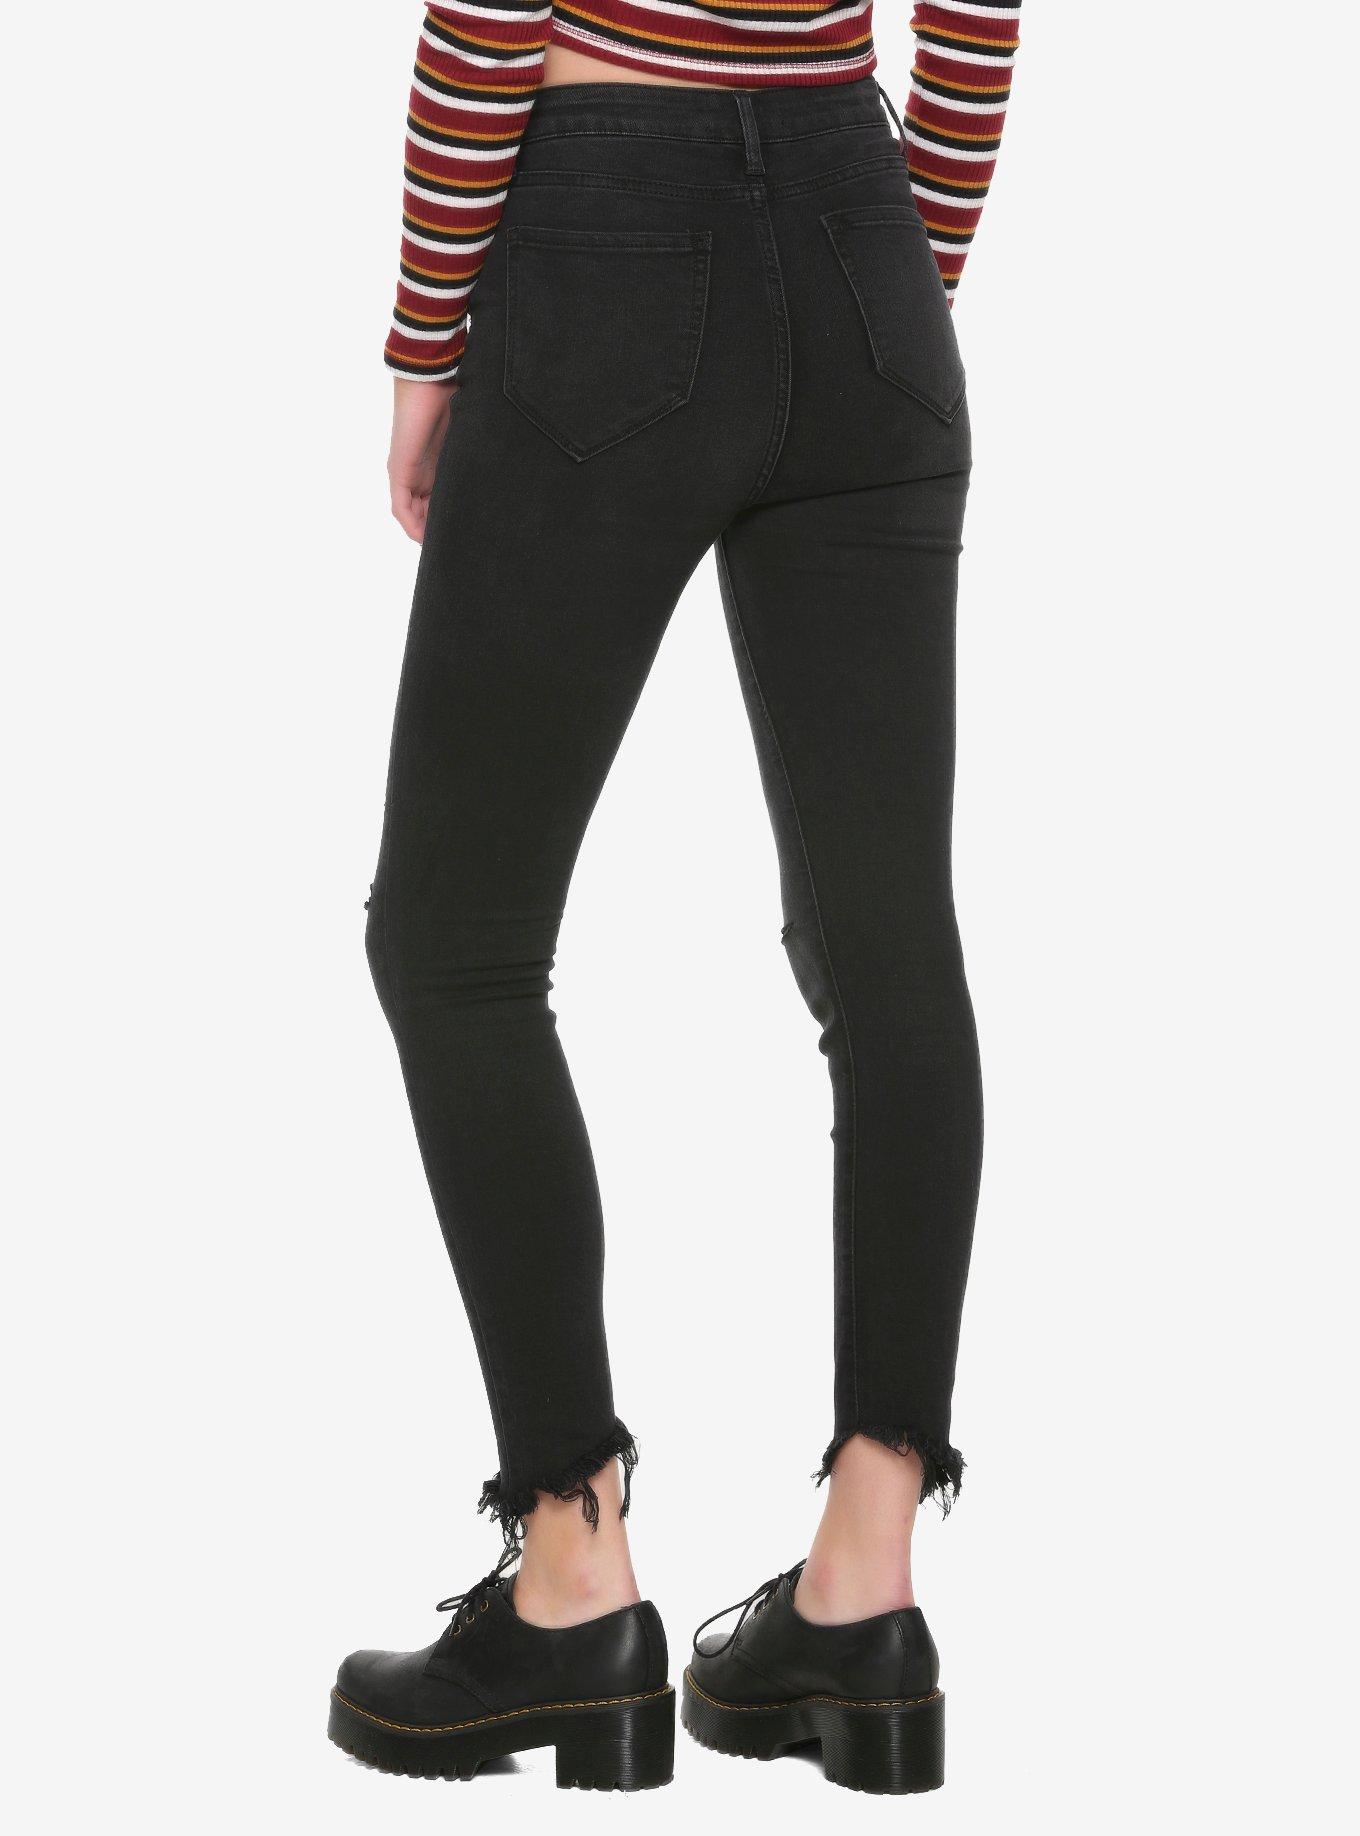 Black Lace-Up Front Distressed Skinny Jeans, BLACK, alternate